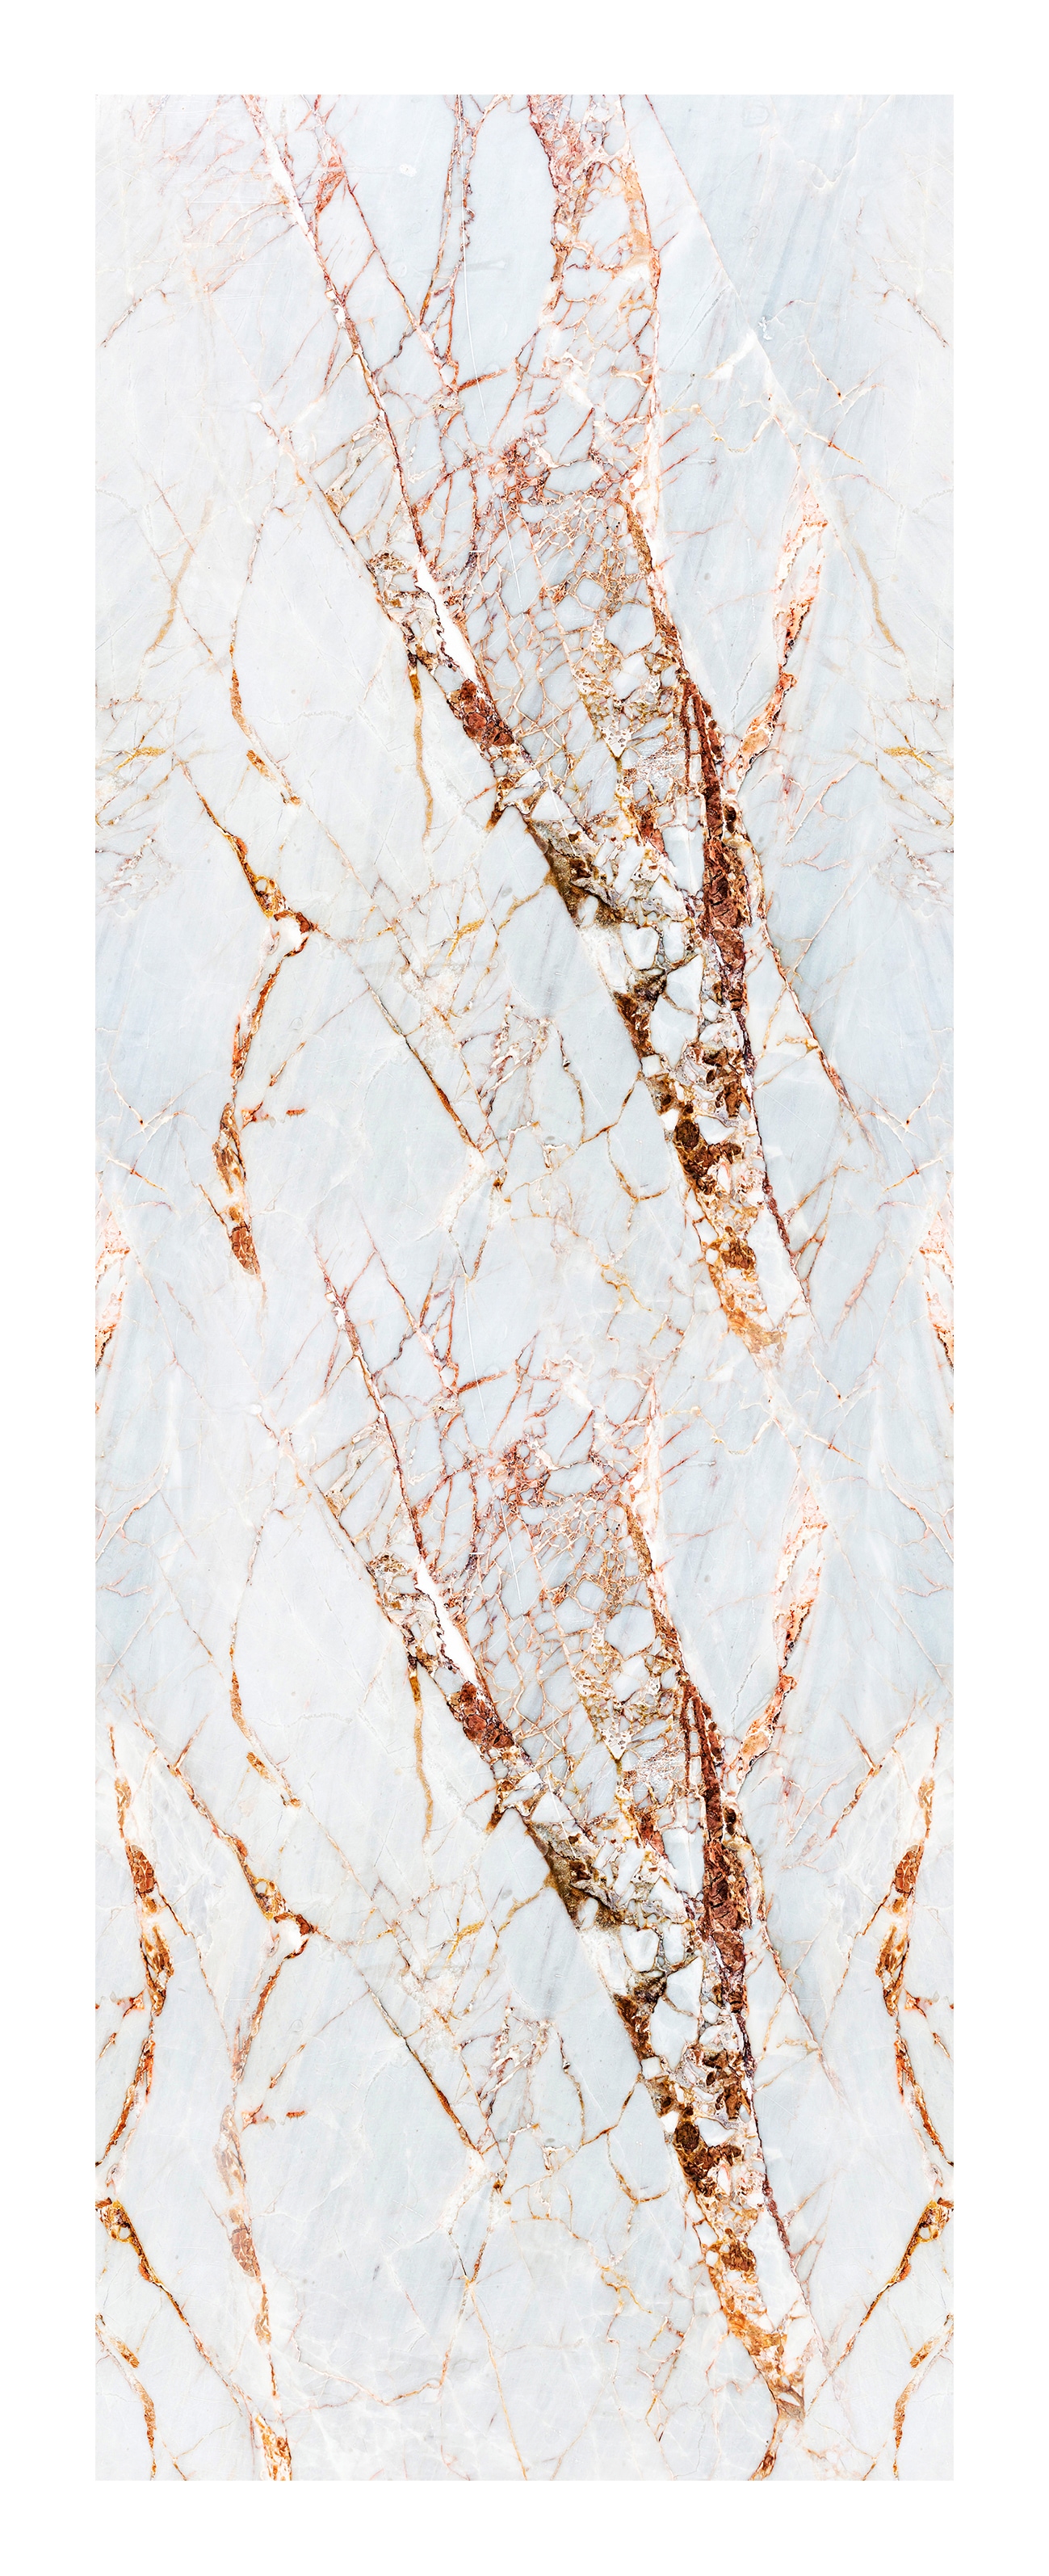 Vinyltapete »Marmor-Weiß«, Steinoptik, 90 x 250 cm, selbstklebend